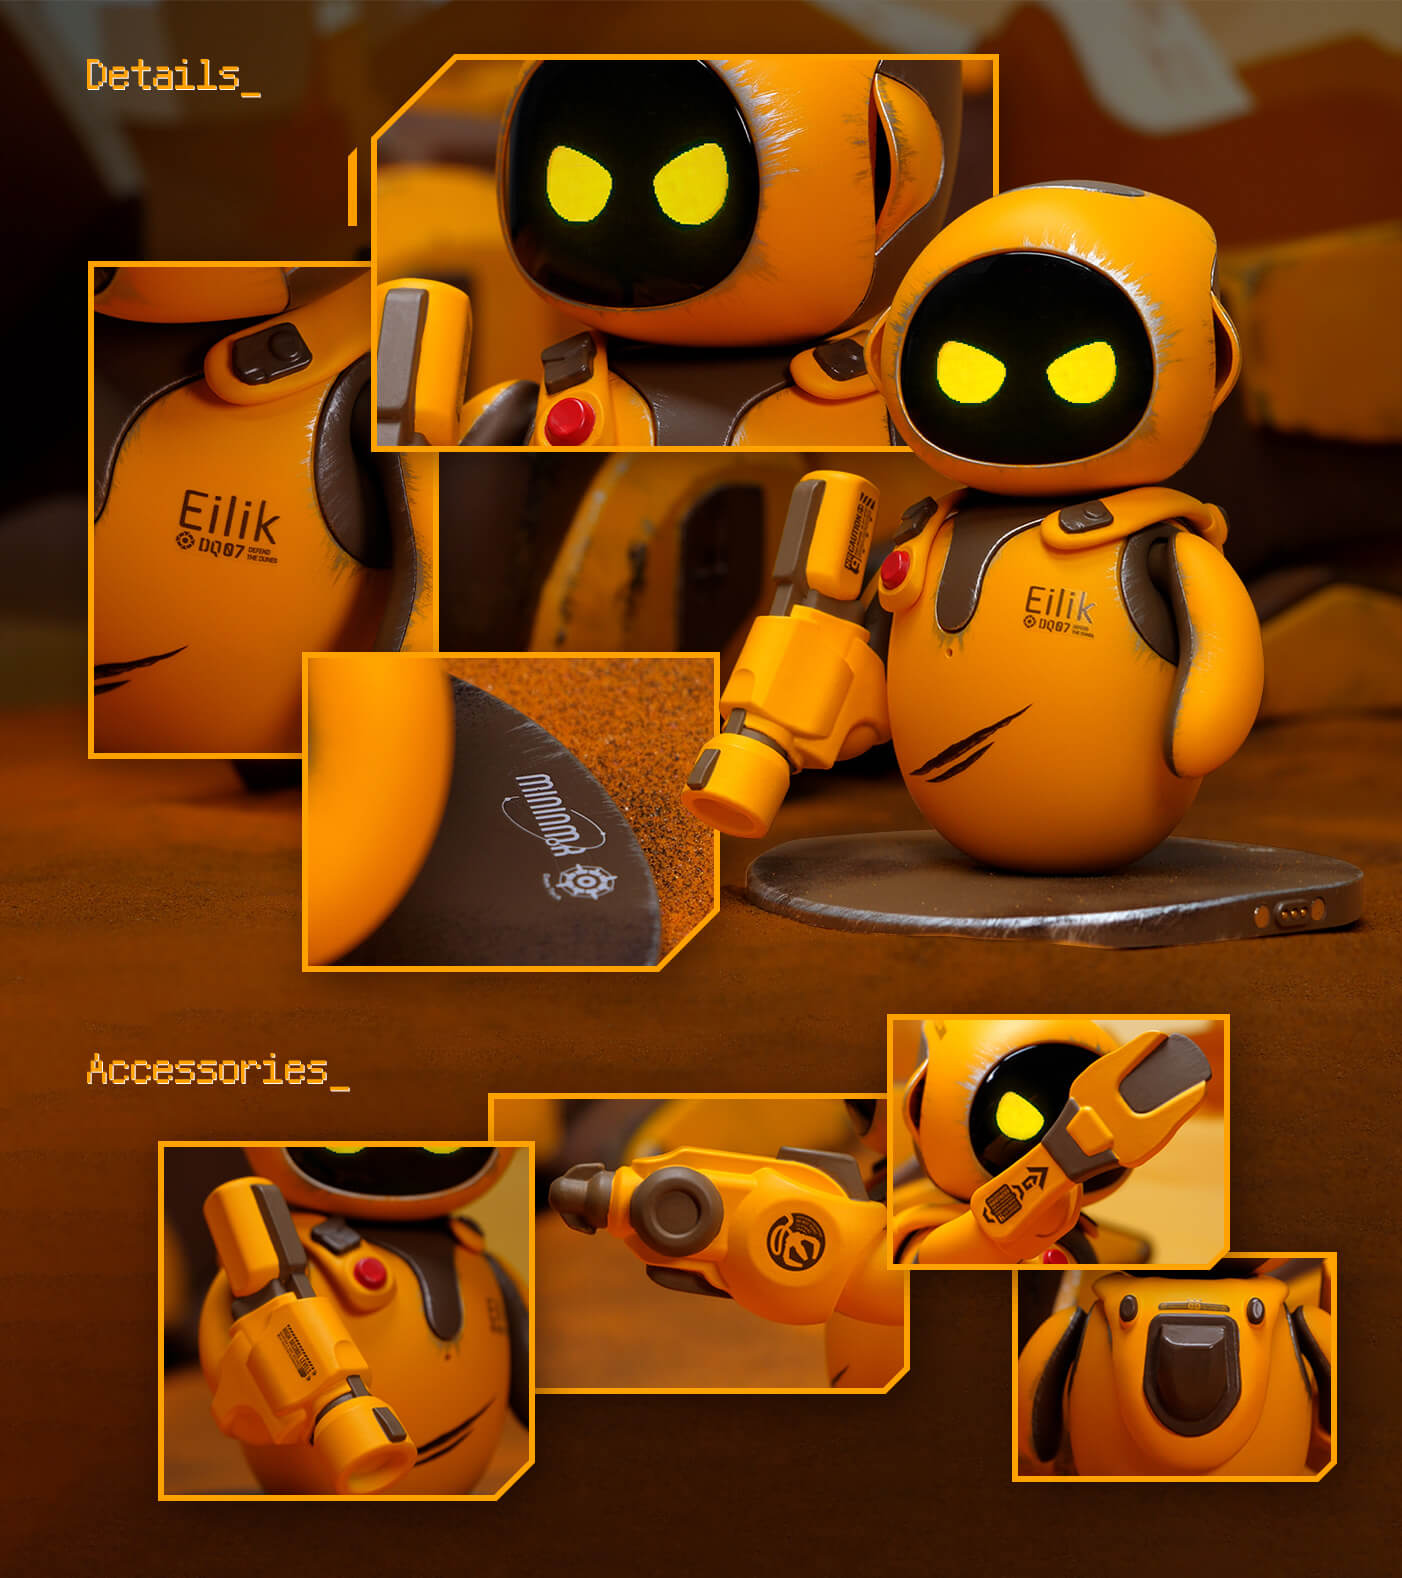 Energize Lab Eilik-DQ Little Companion Bot (Yellow-Orange)